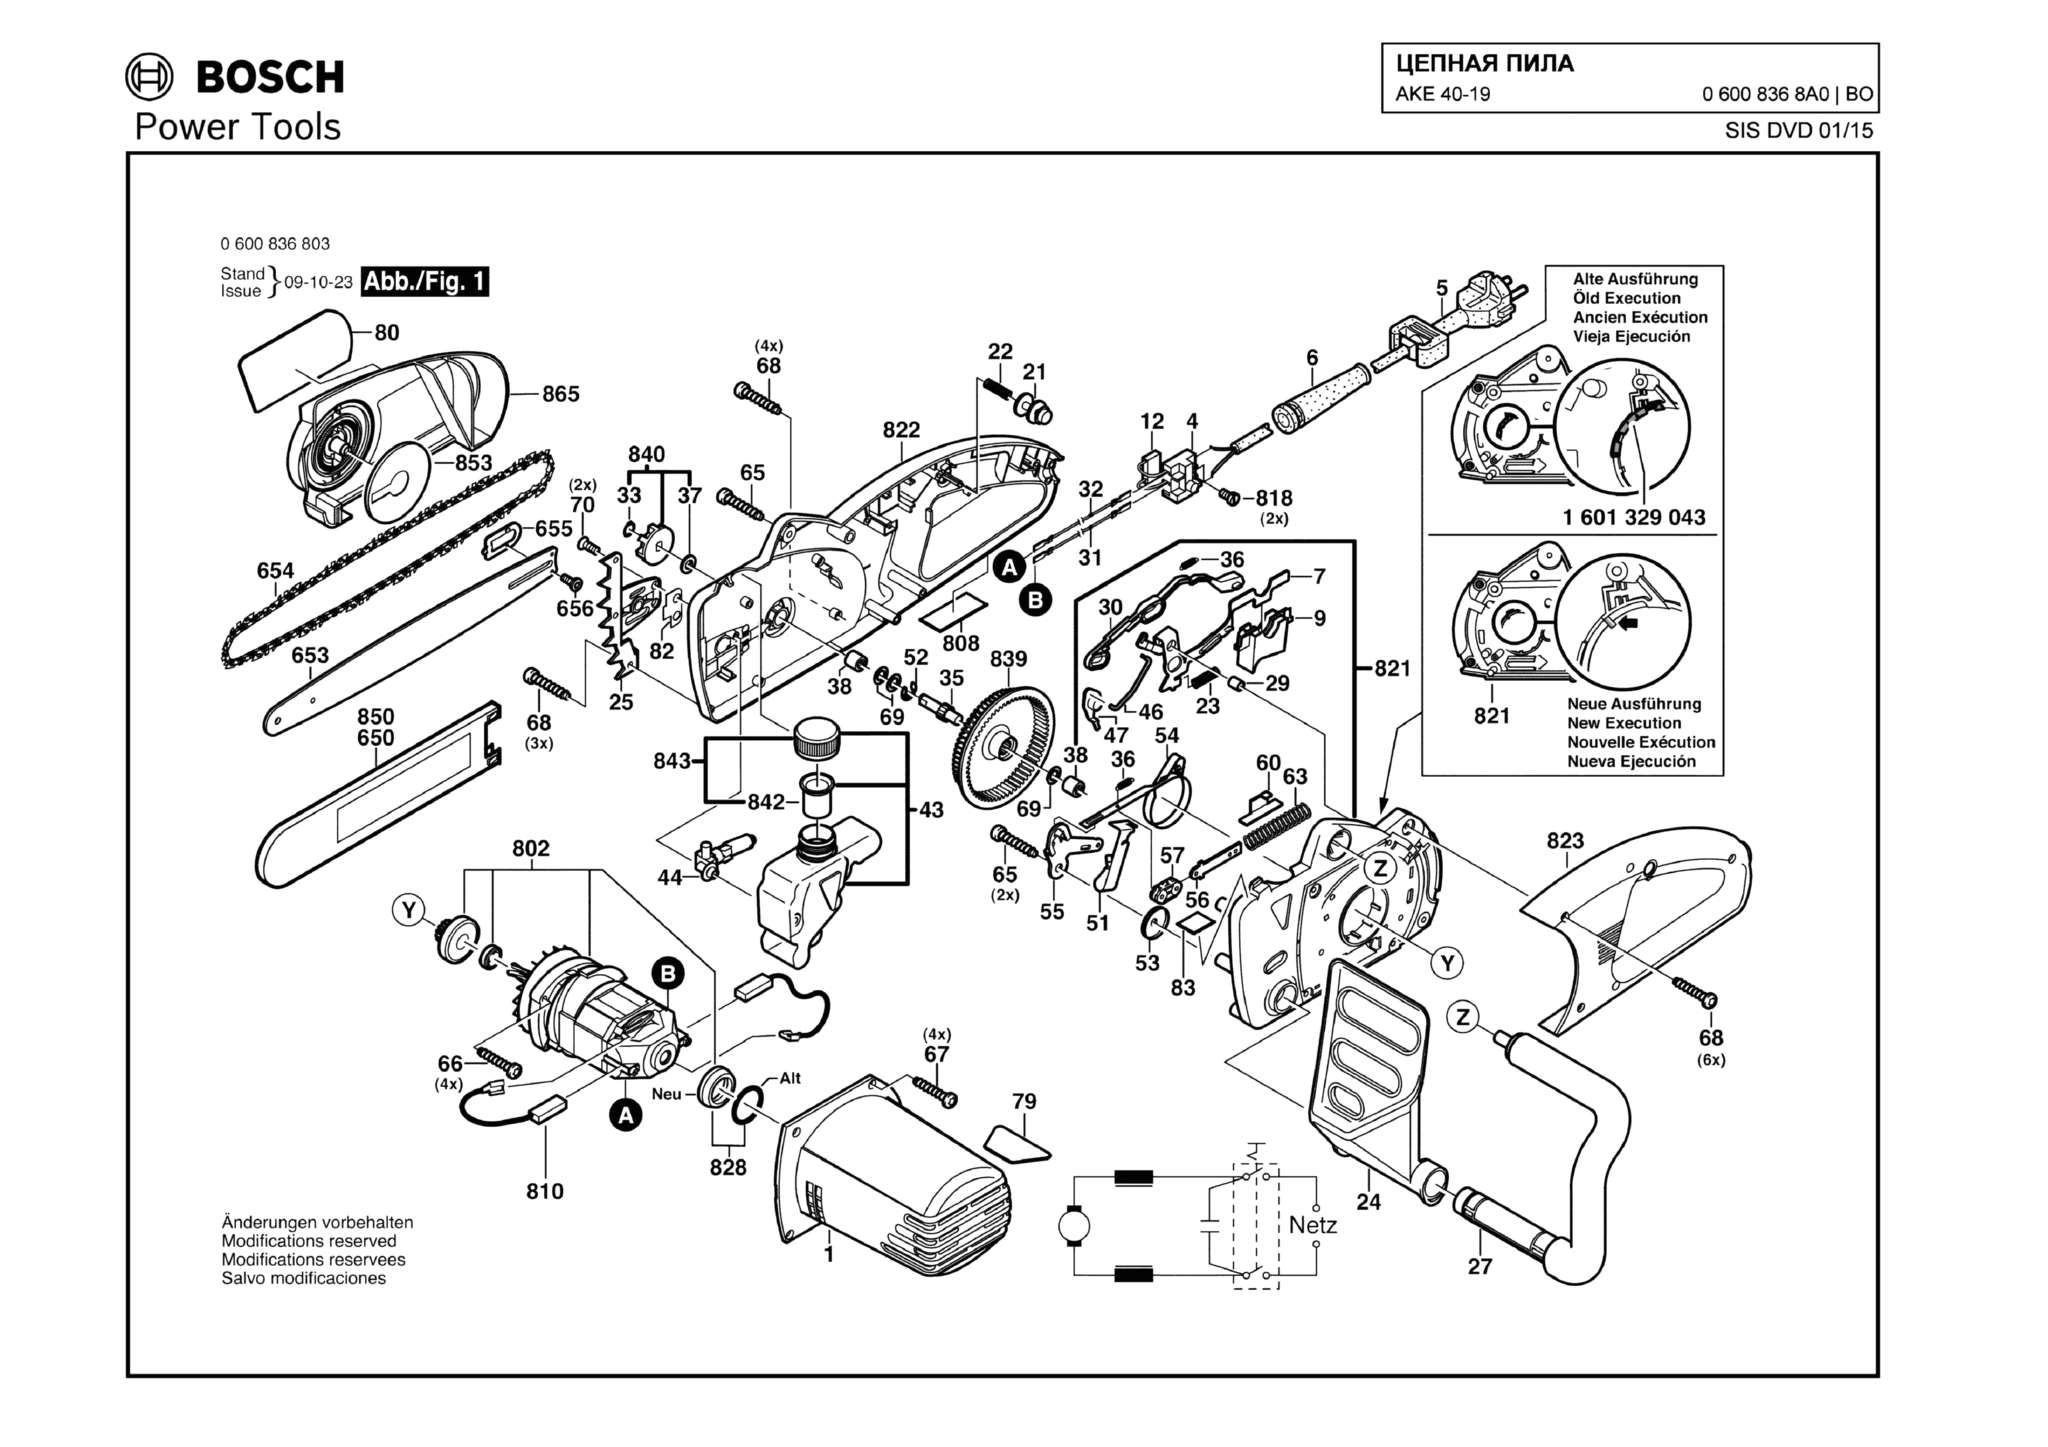 Запчасти, схема и деталировка Bosch AKE 40-19 (ТИП 06008368A0)